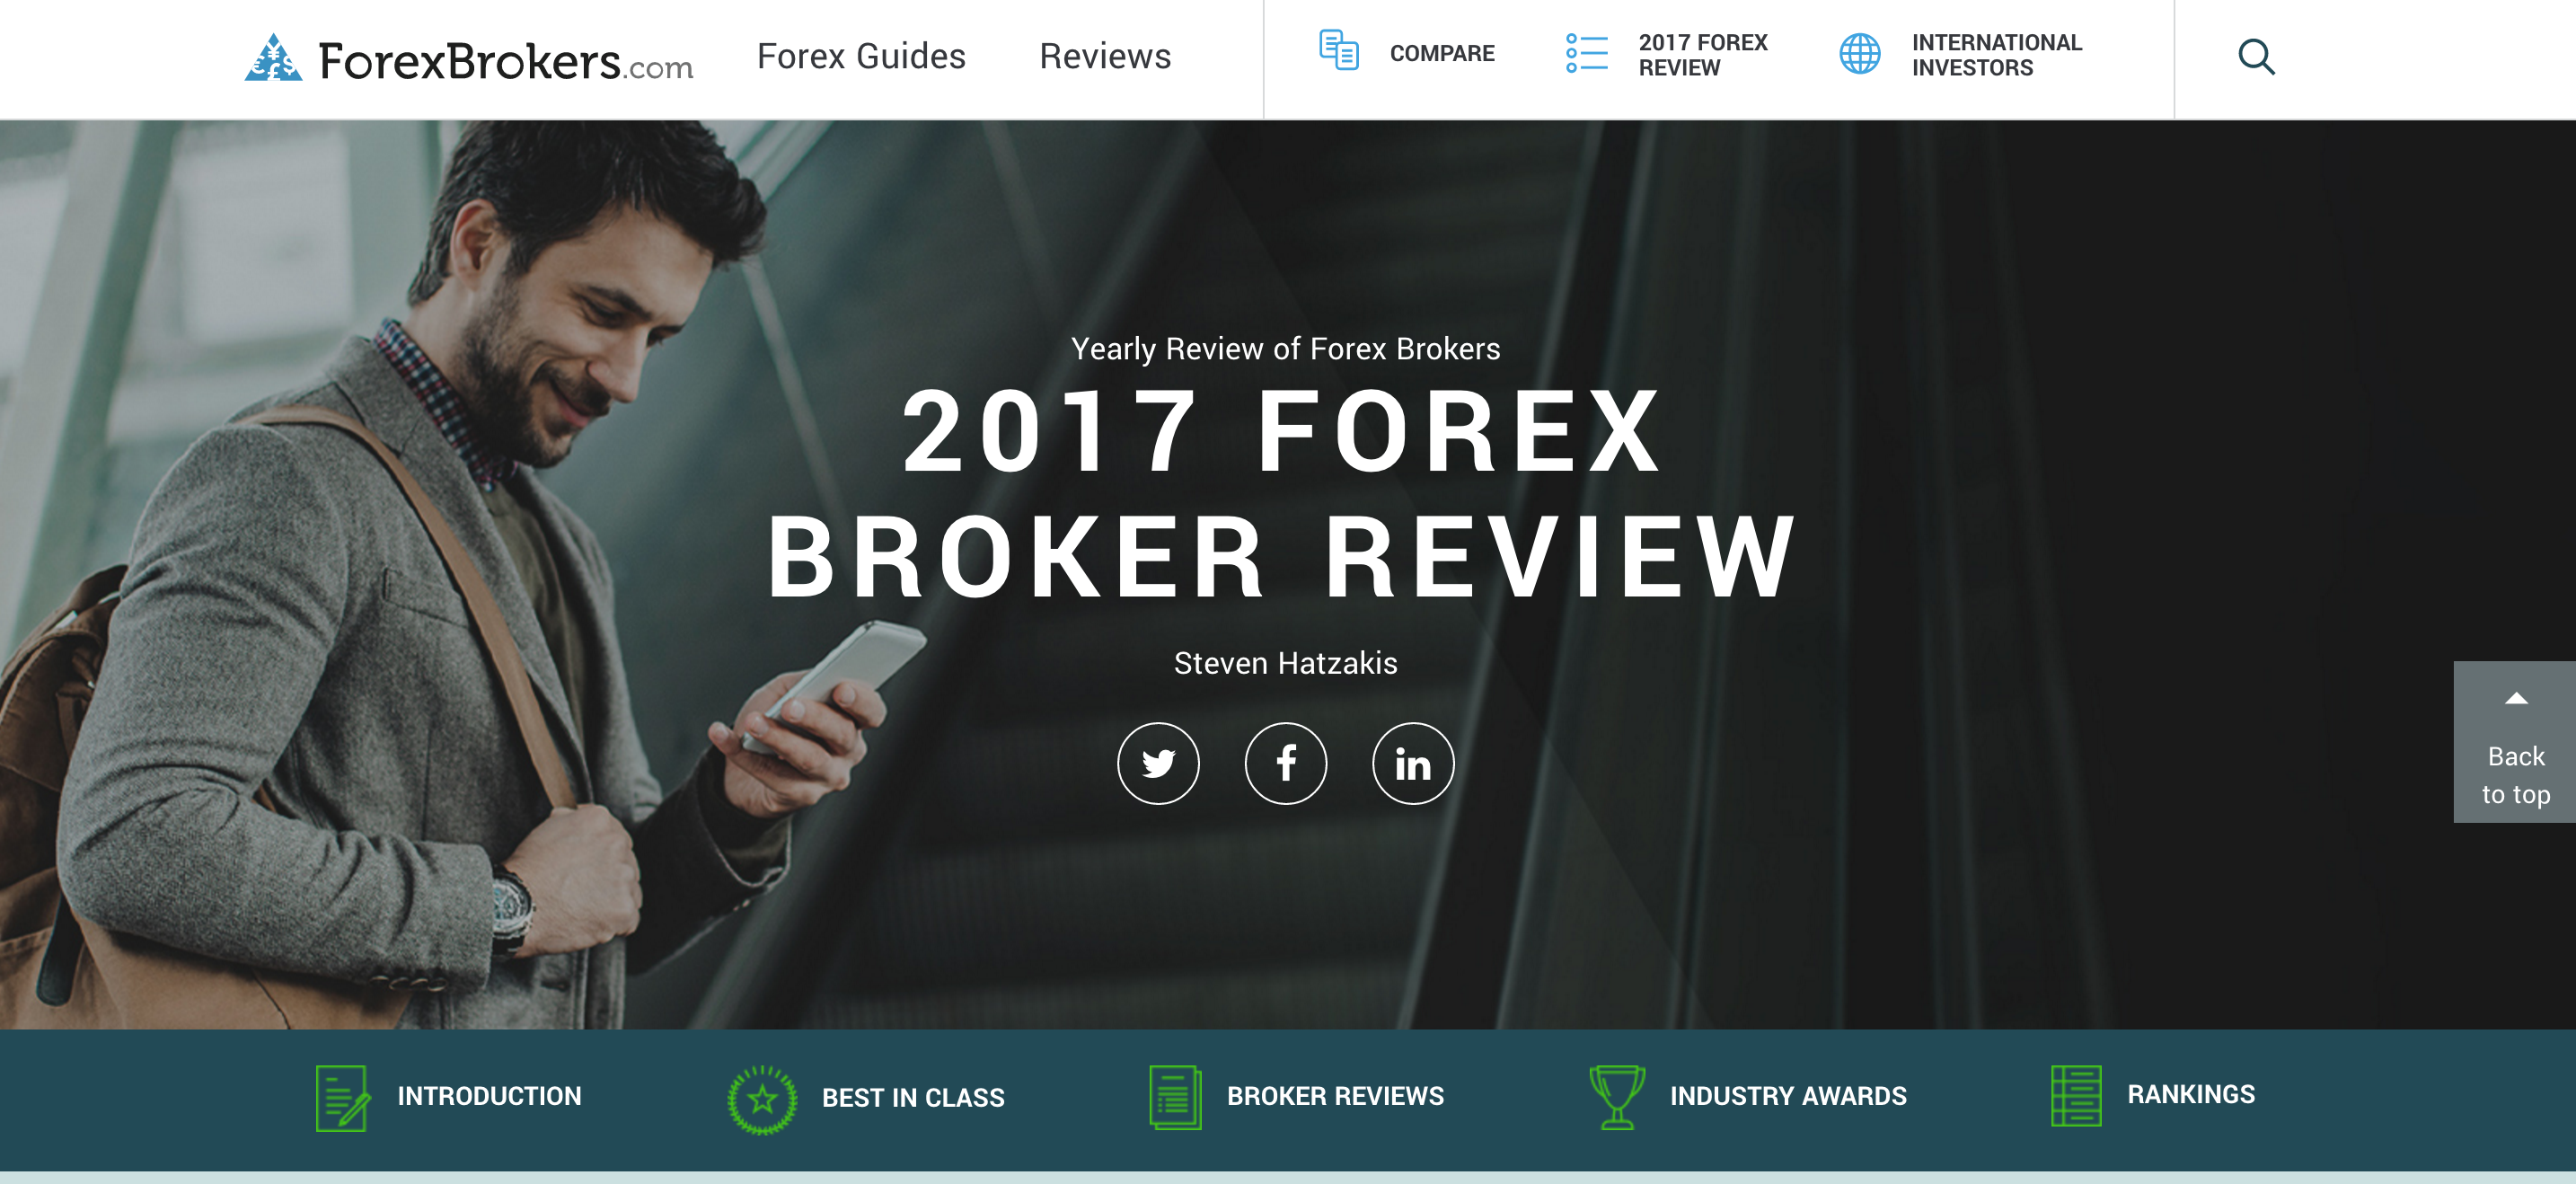 2017-Forex-Broker-Review-Steven-Hatzakis.png